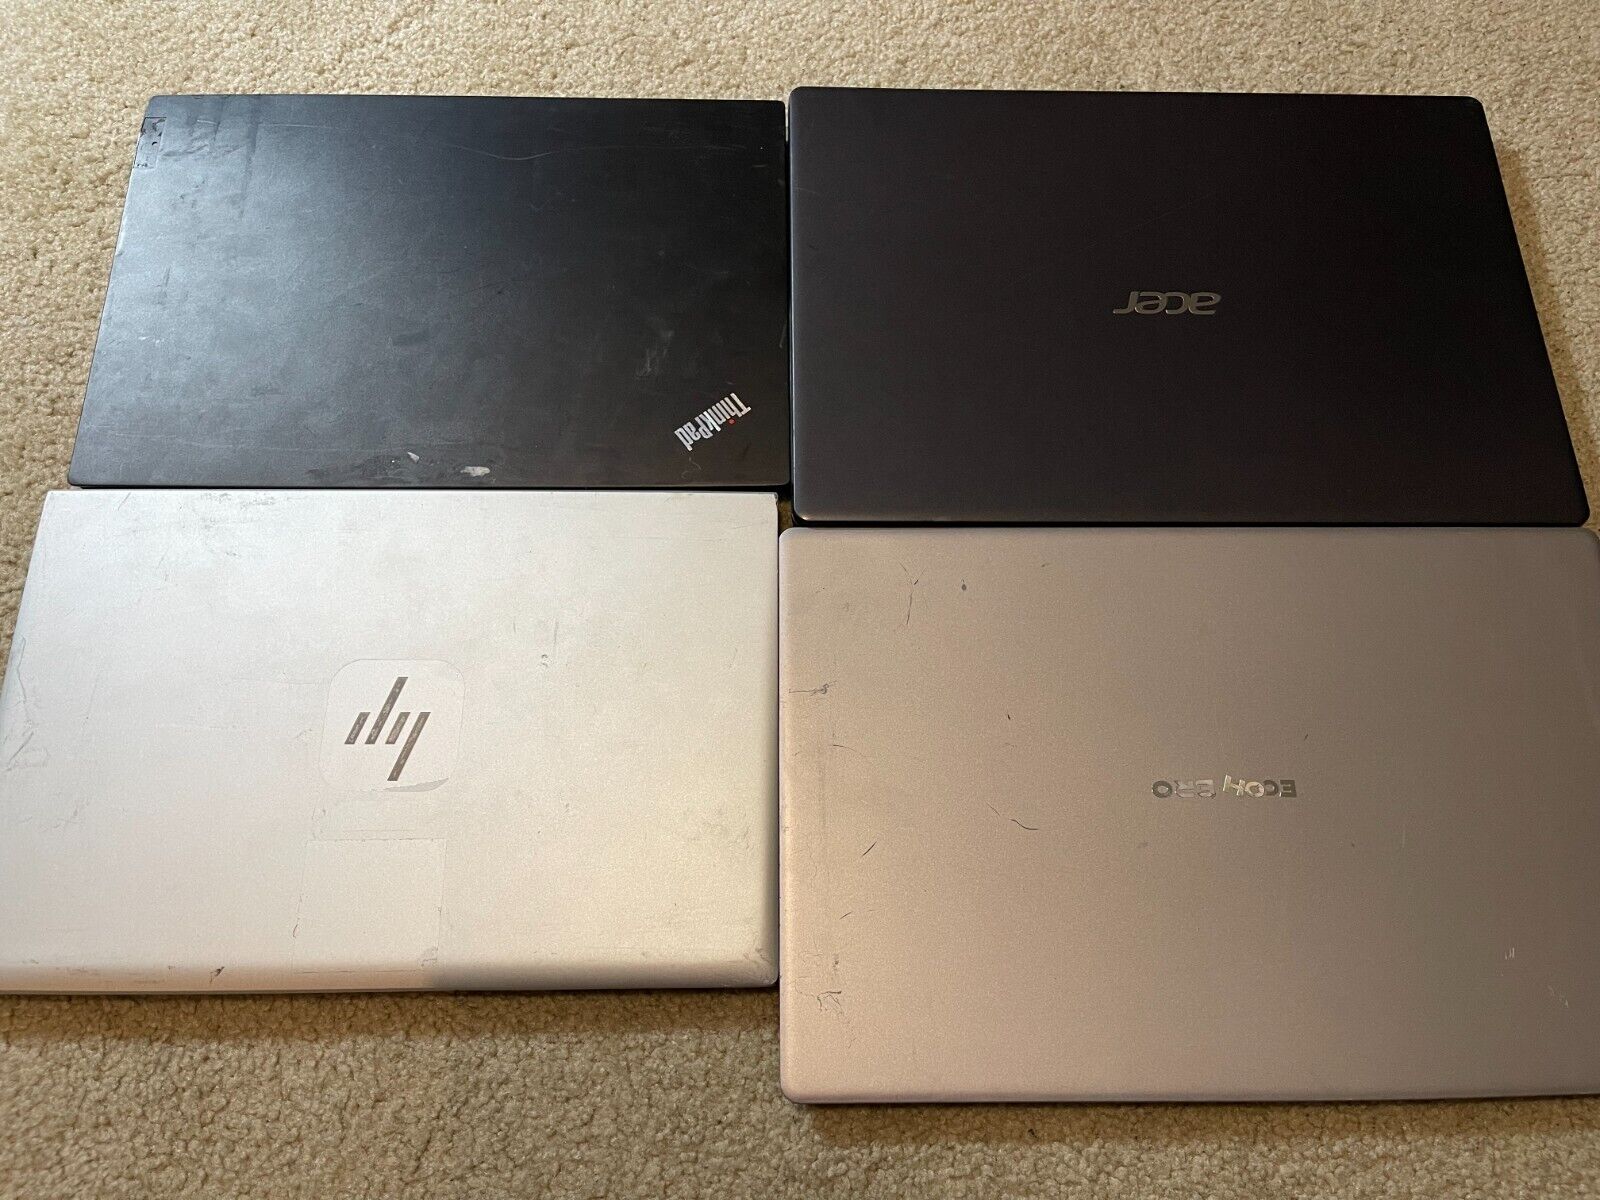 Lot of 4 laptops - 1x Lenovo, 1x Acer, 1x HP, 1x Misc